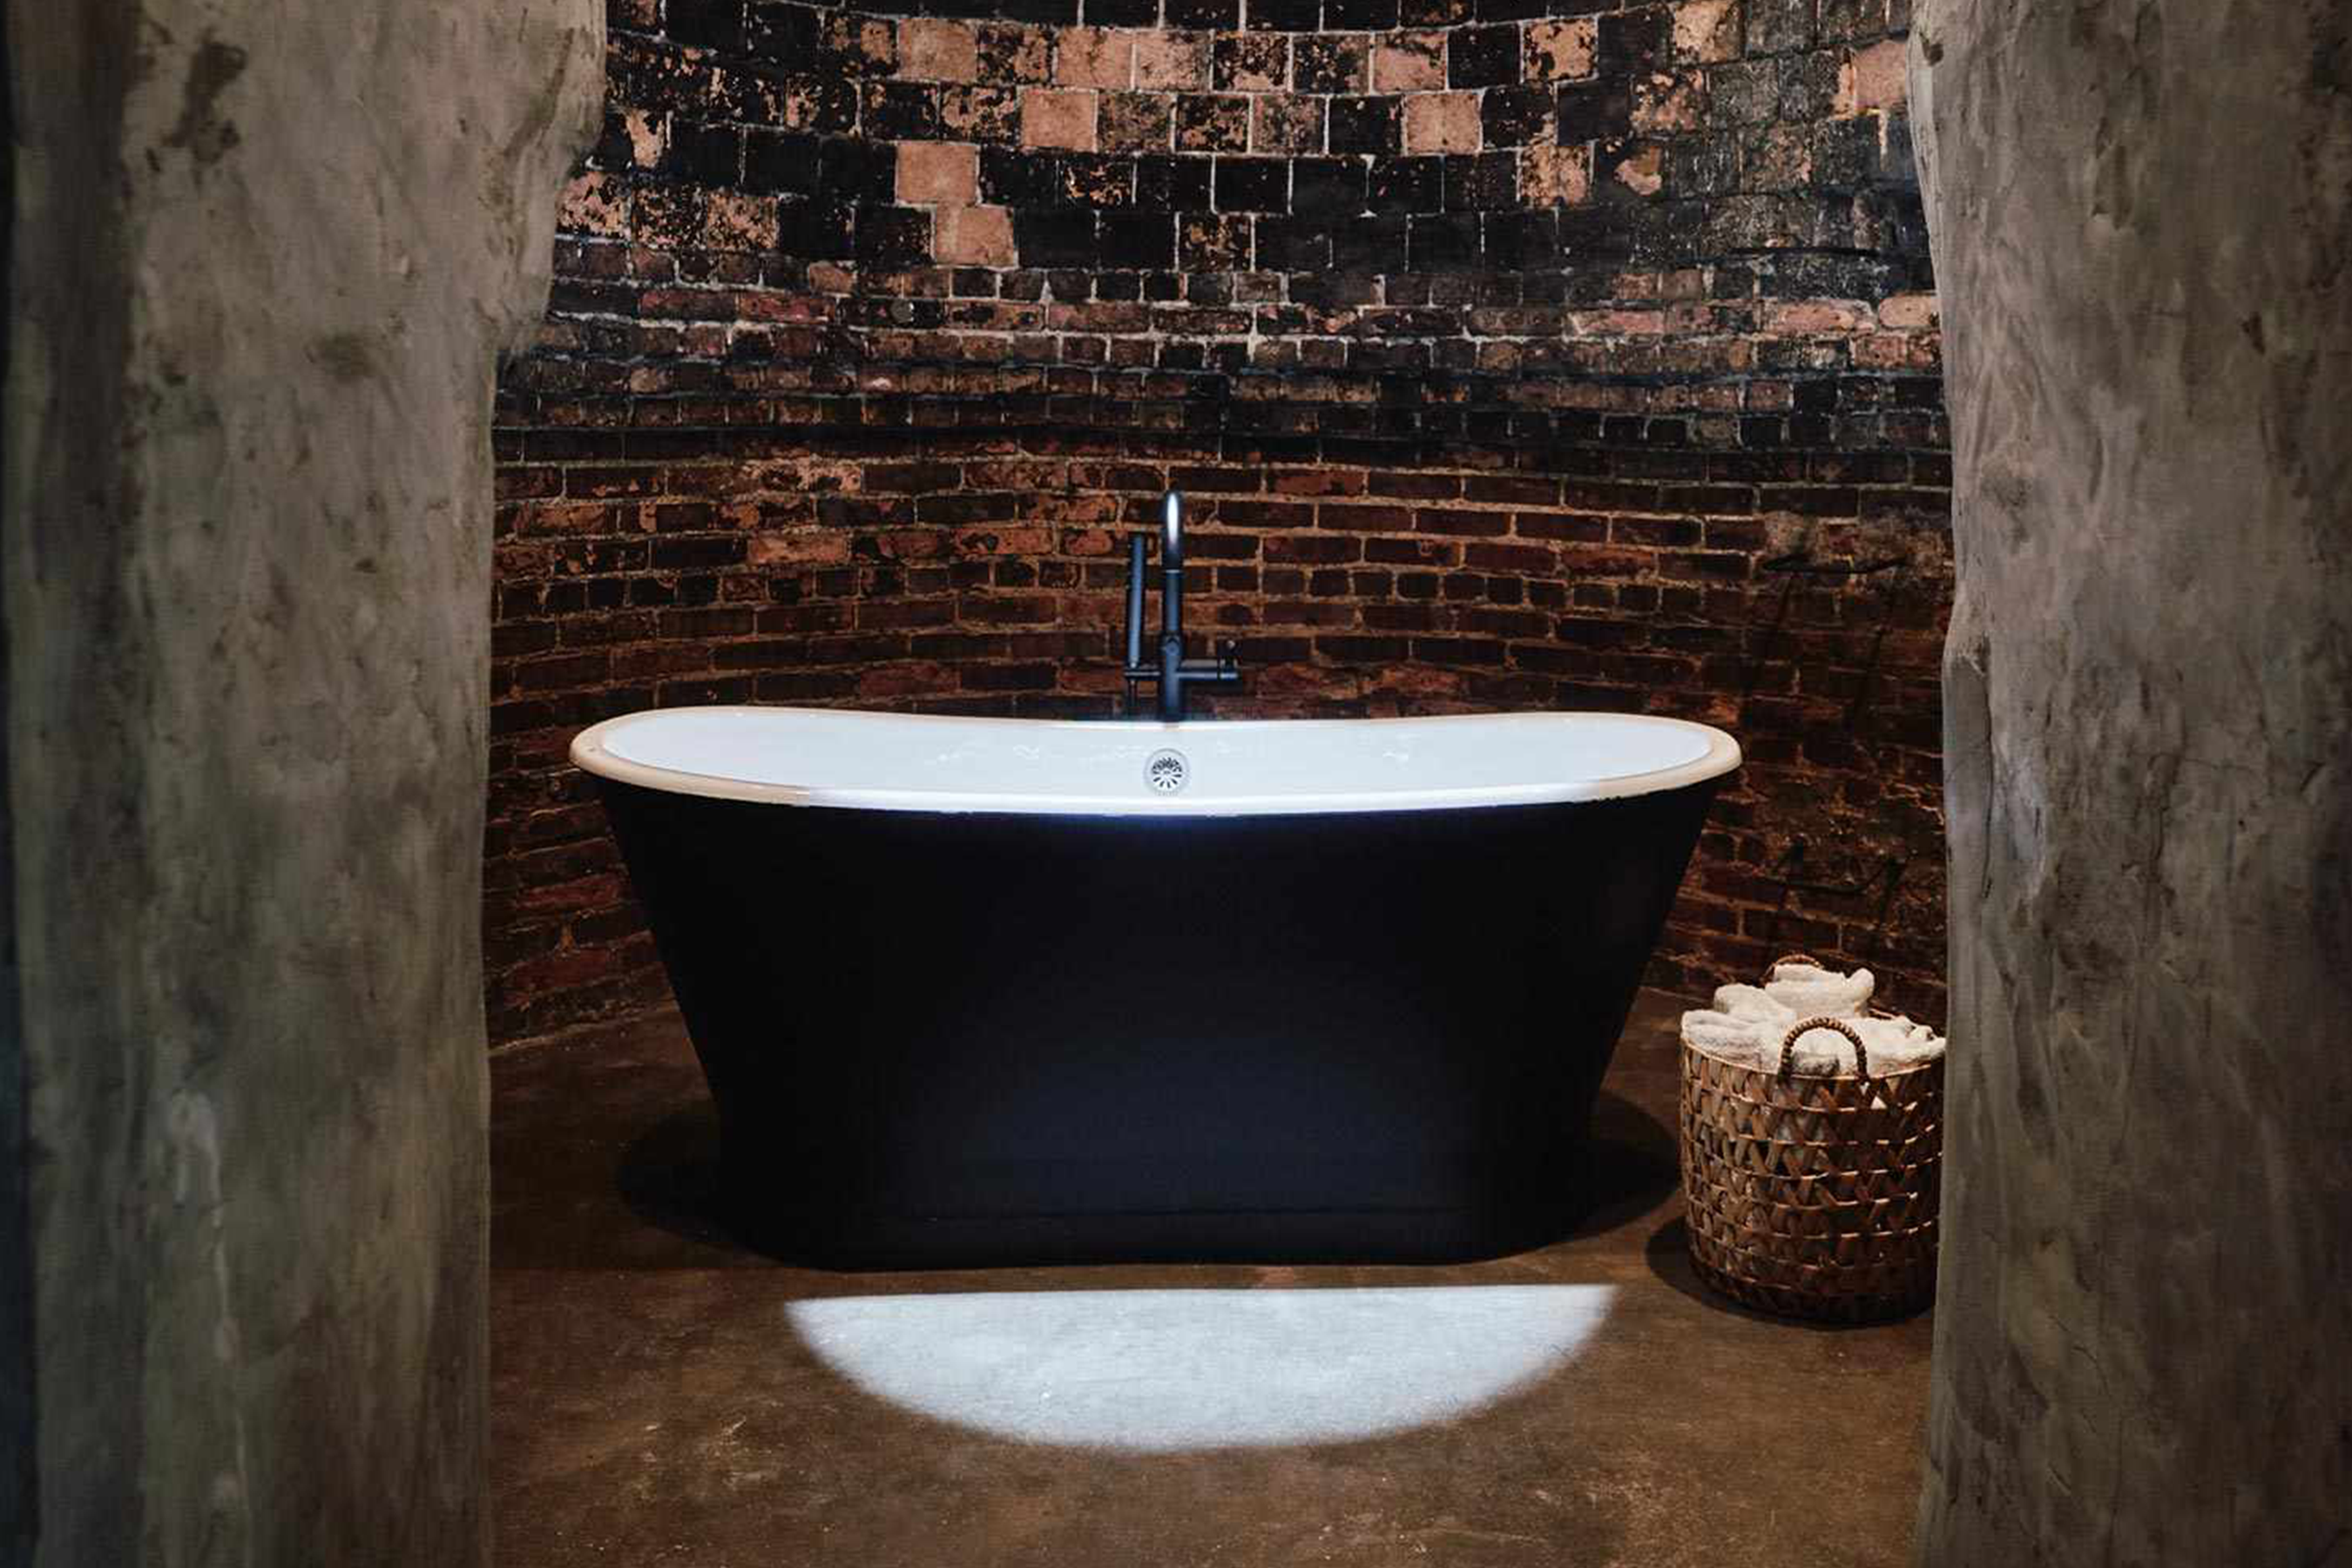 A bath tub at the Bath House in Williamsburg